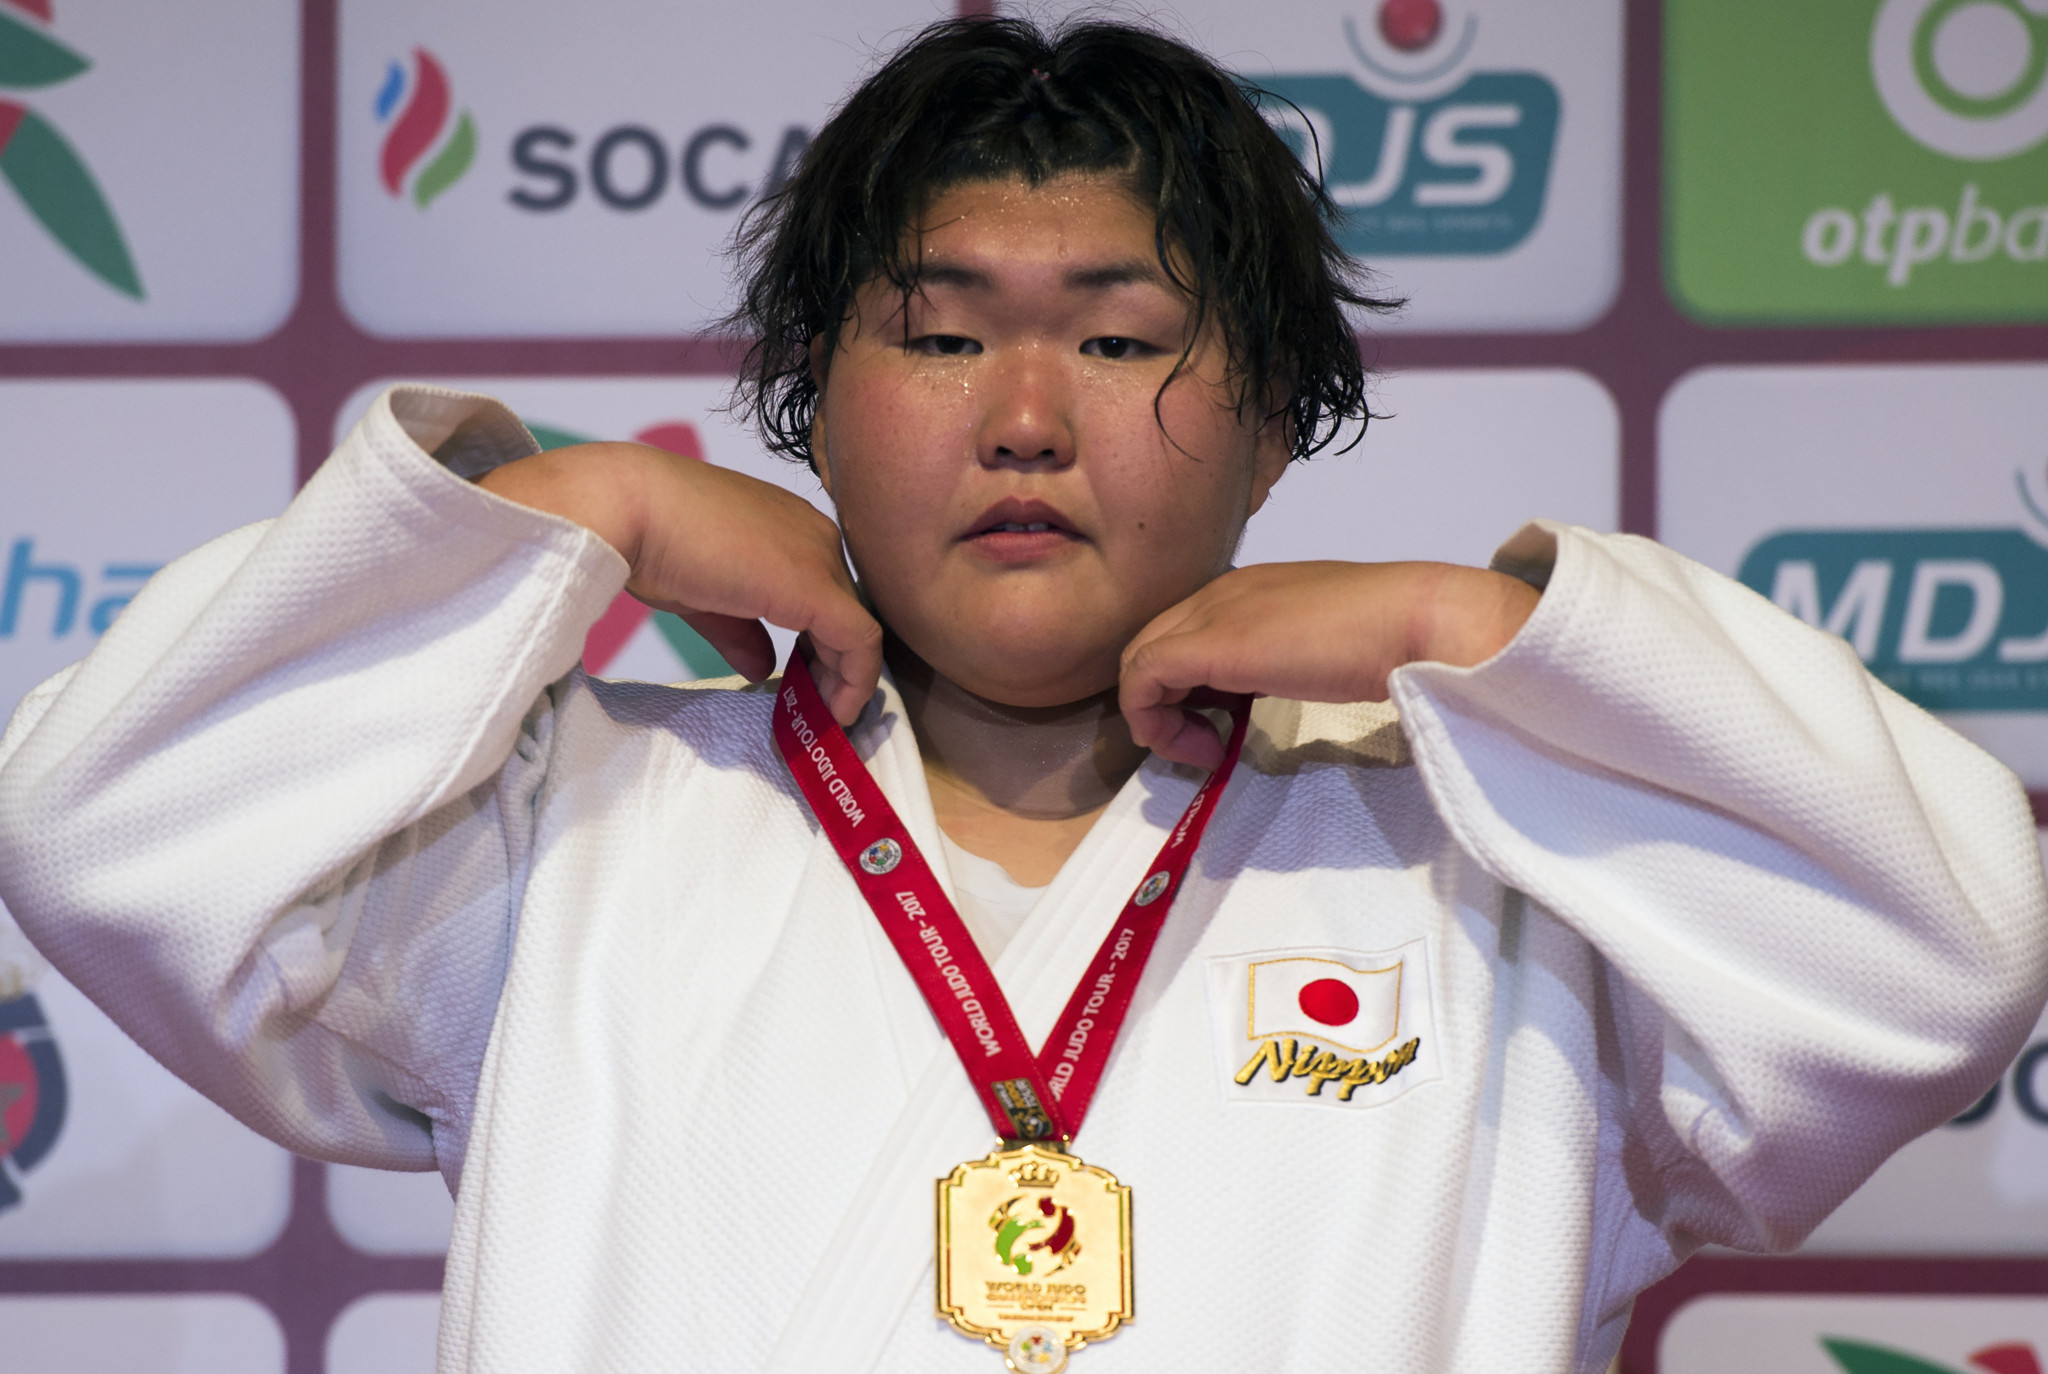 Japanese women on top at International Judo Federation Openweight World Championships